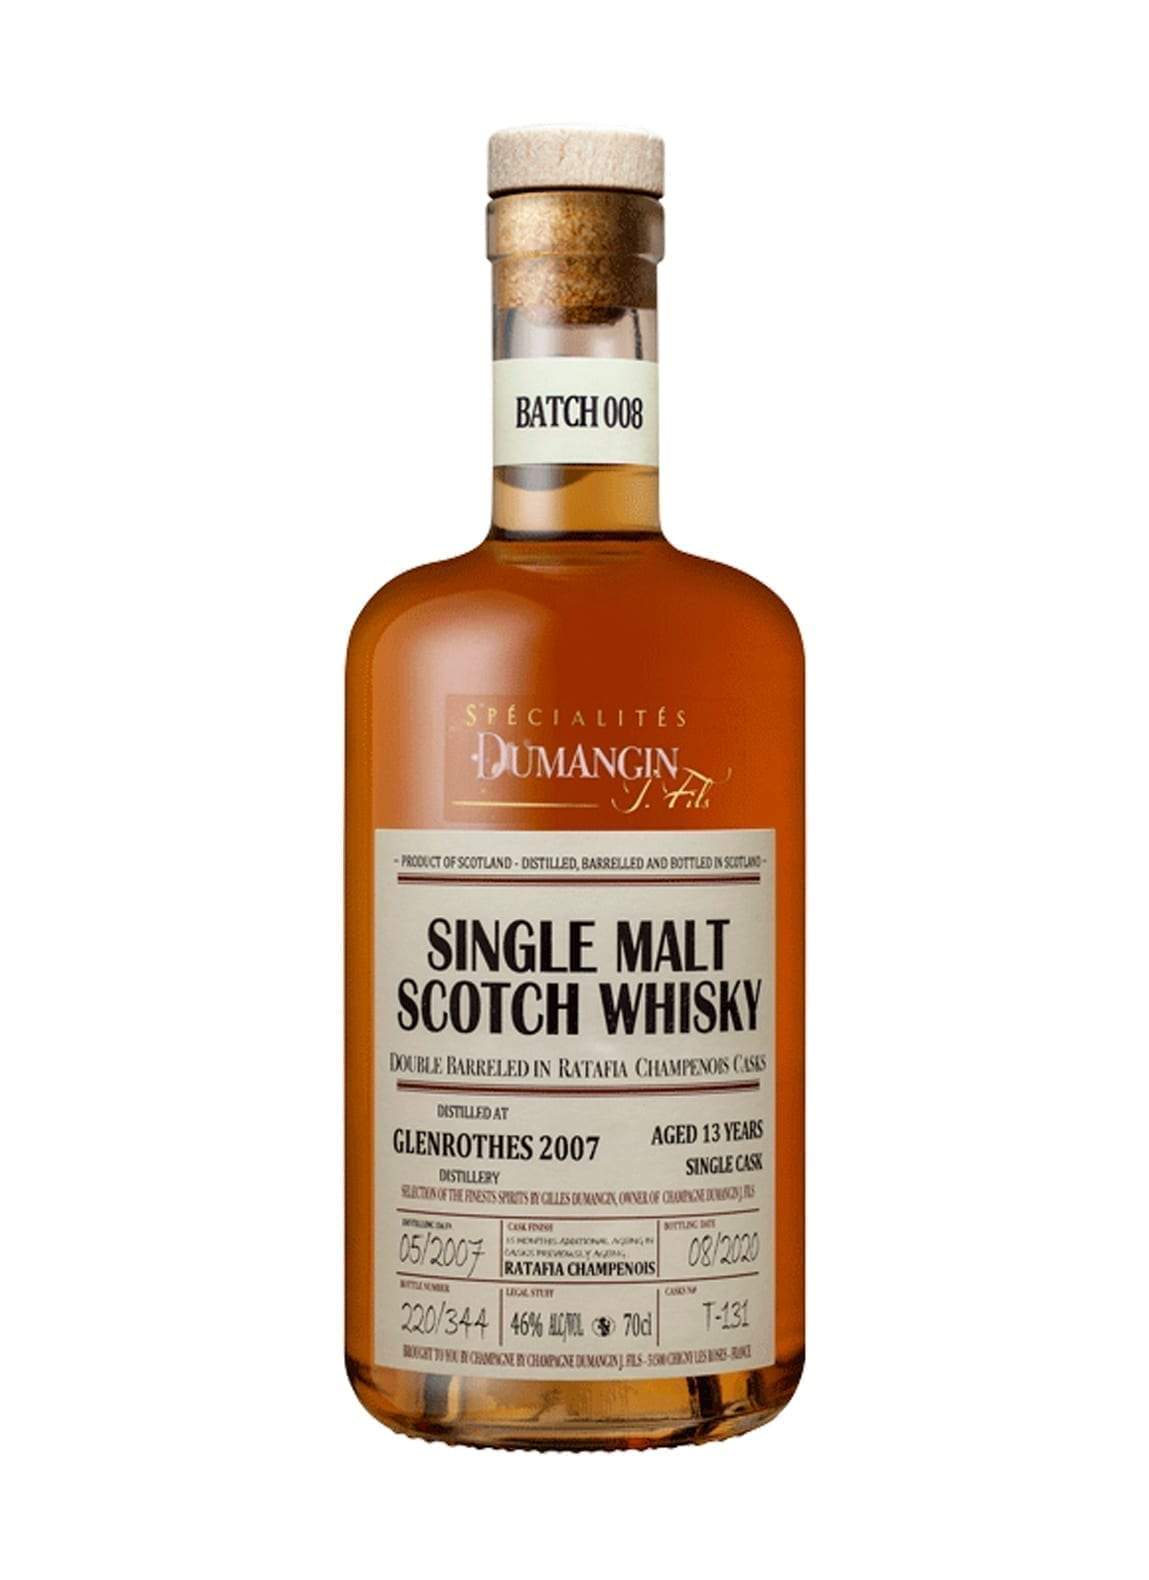 Dumangin Single Malt Scotch Whisky Glenrothes 2007 Batch 008 46% 700ml